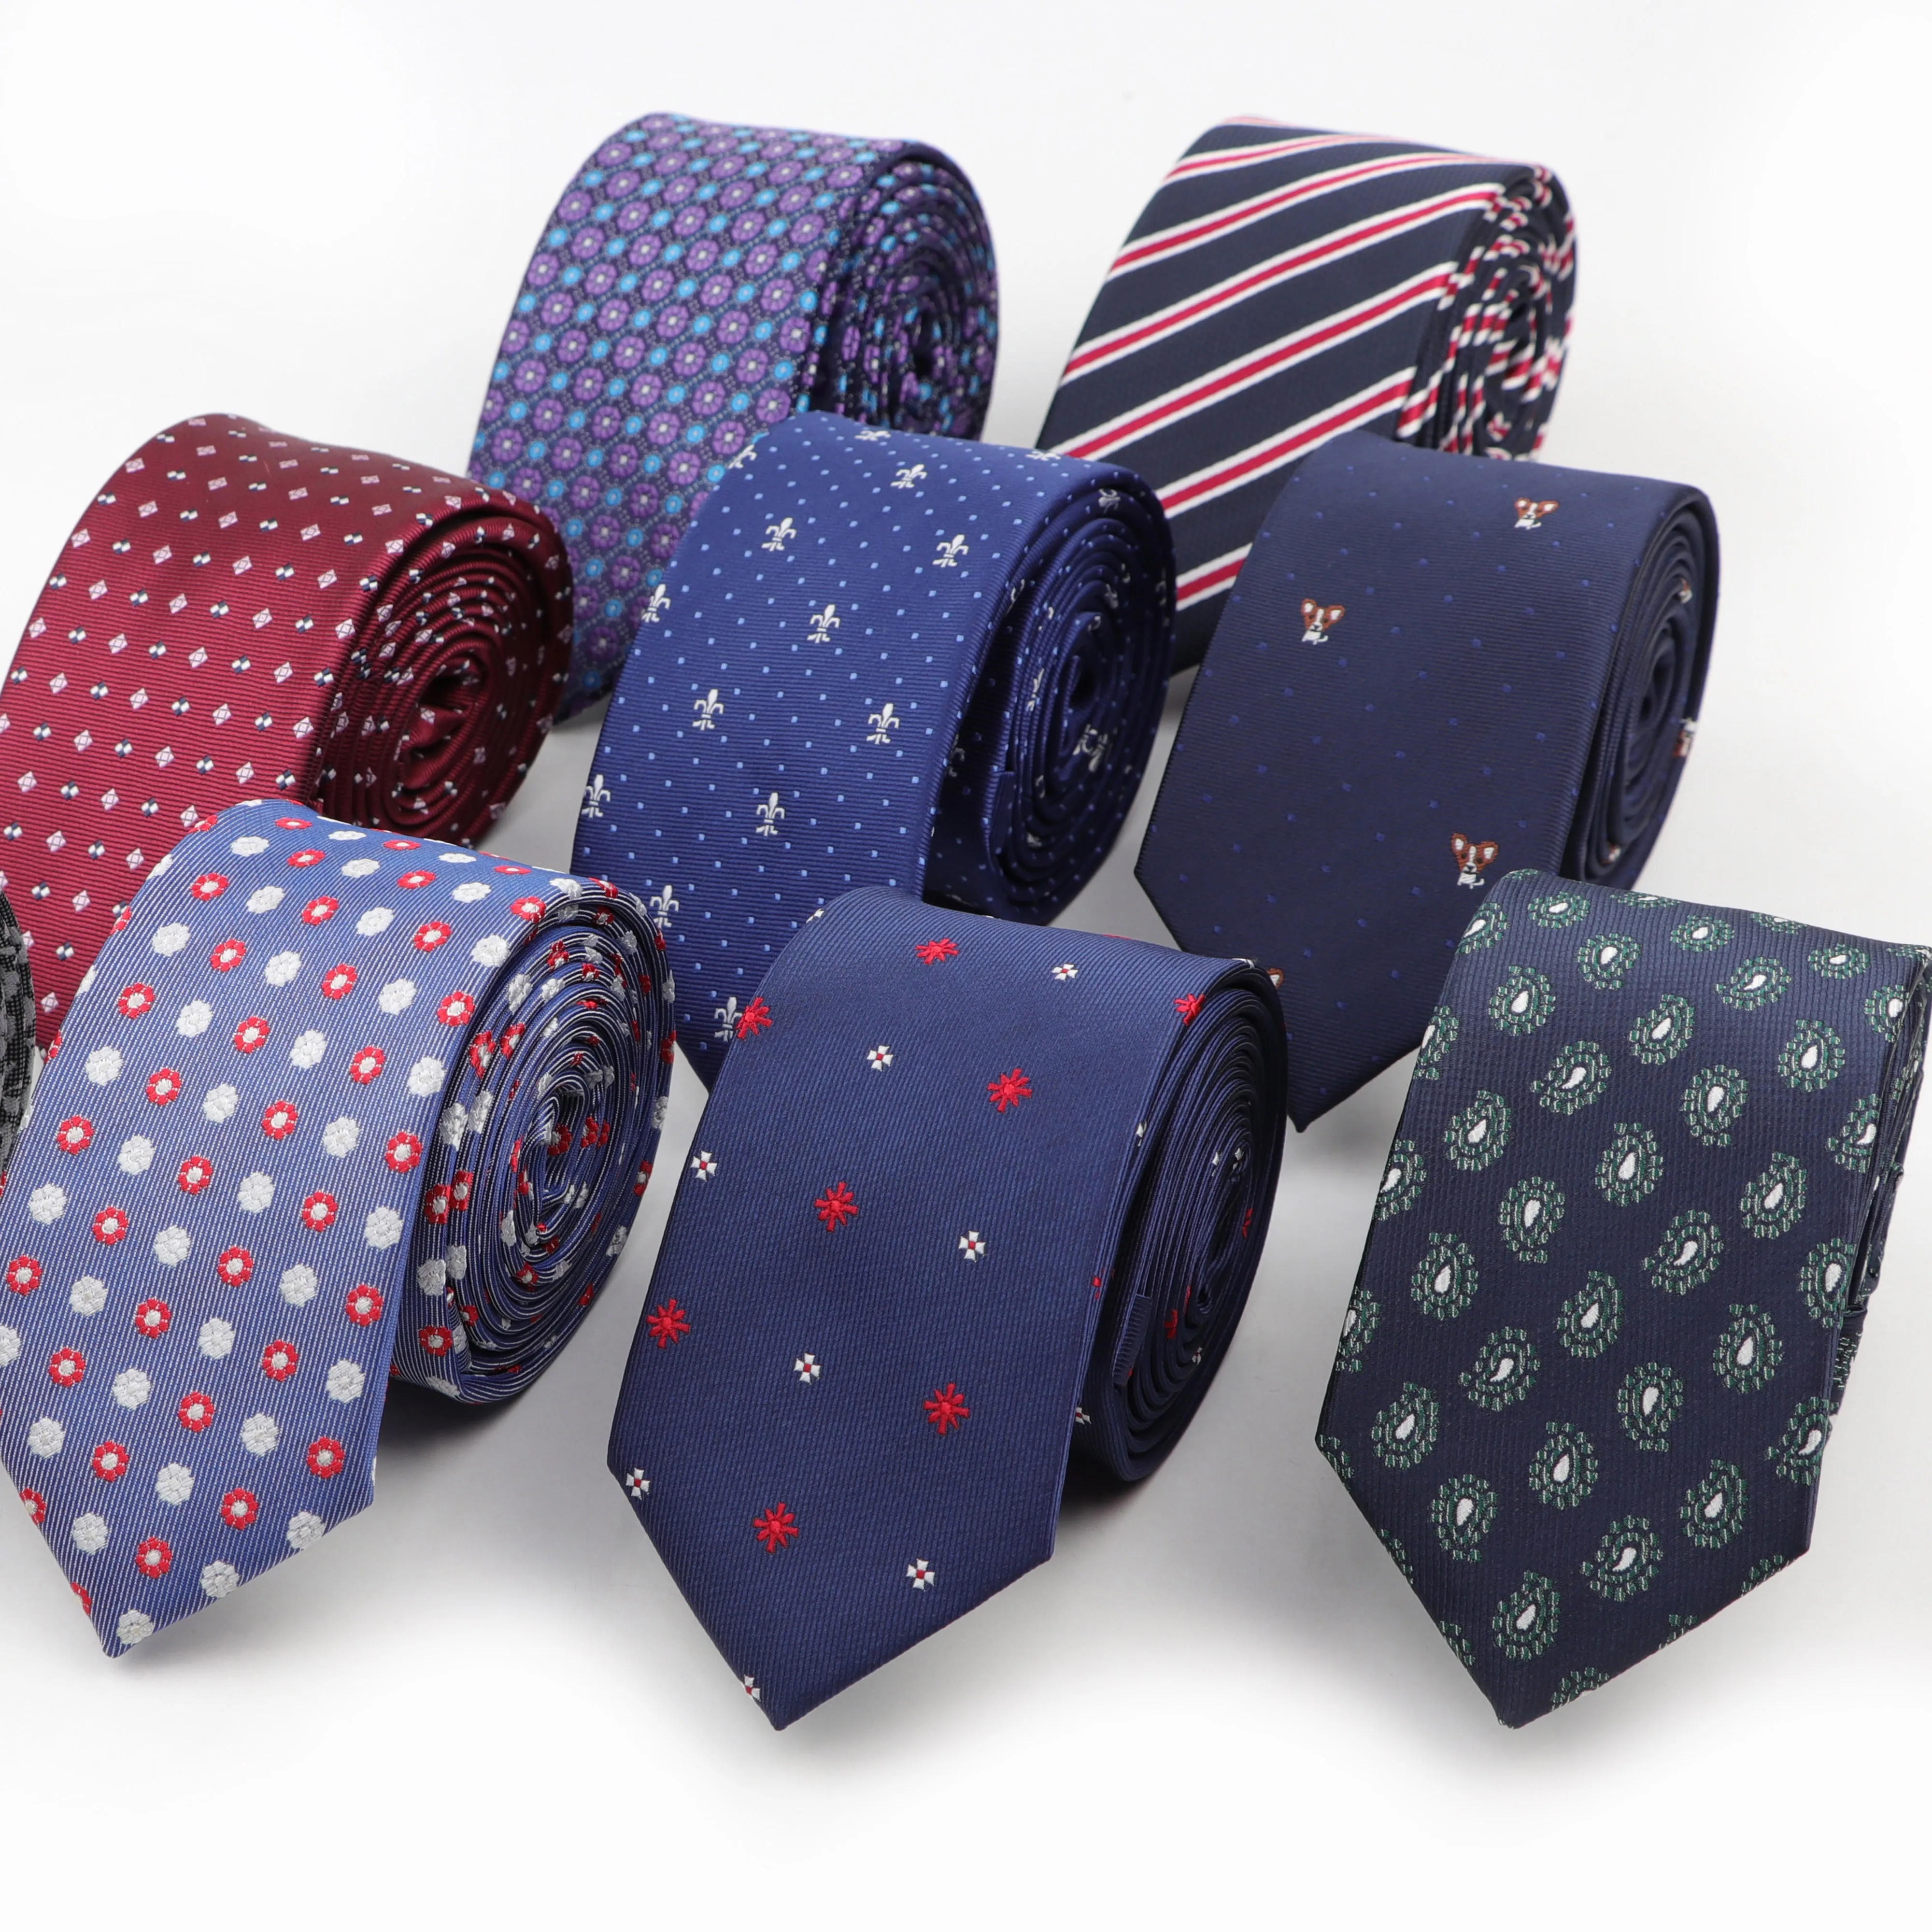 6CM Skinny Tie for Men Narrow Necktie Floral Stripes Ties Neck Ties Accessories